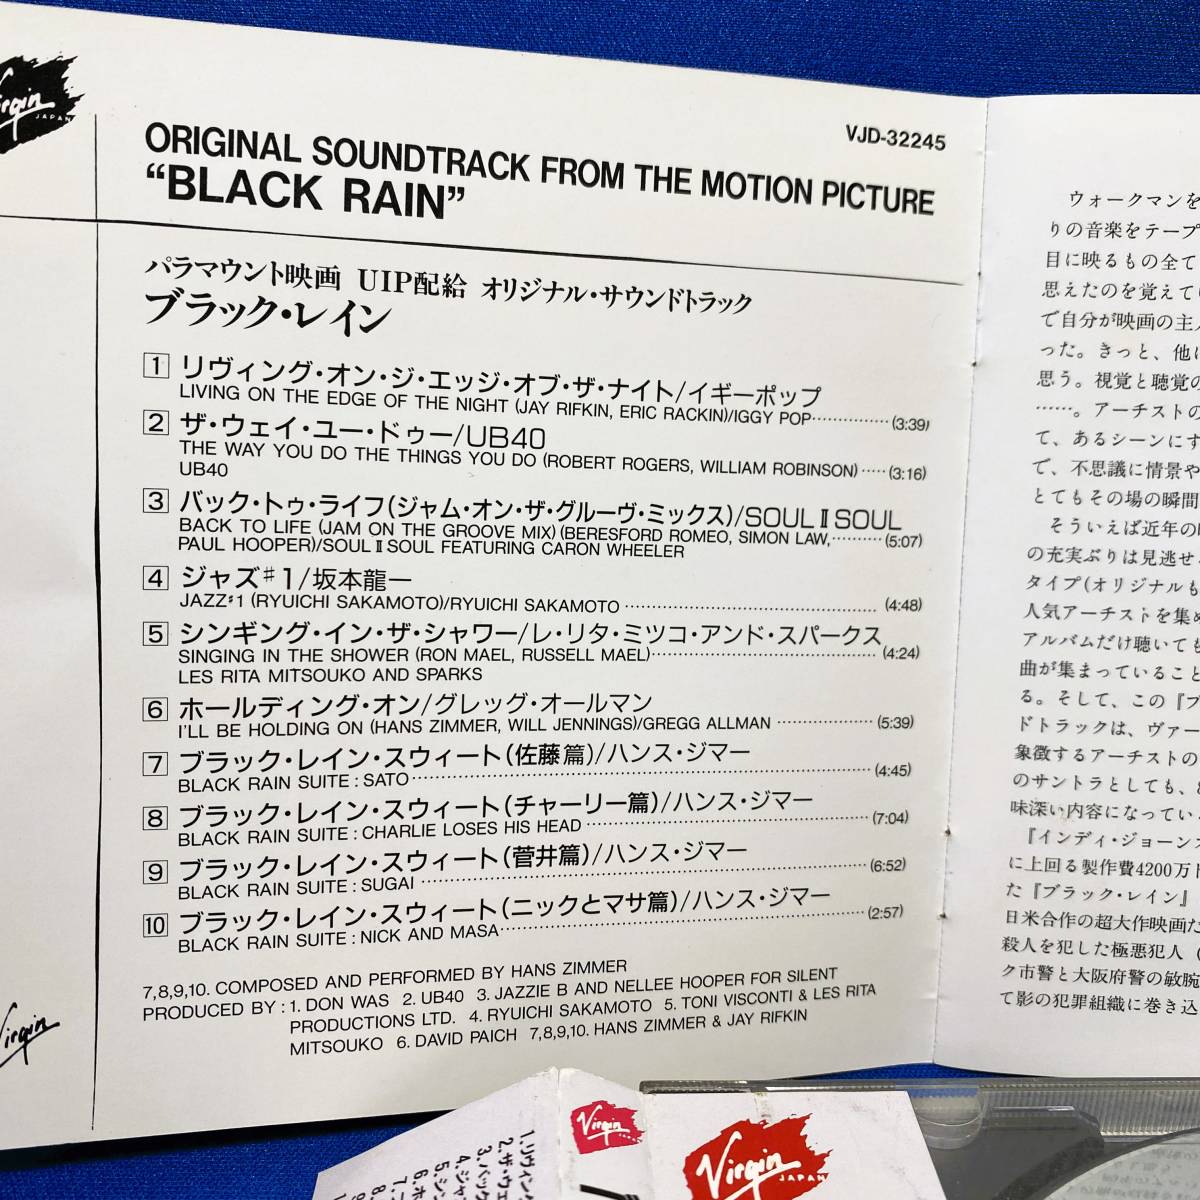  black * rain BLACK RAIN / original * soundtrack / Sakamoto Ryuichi igi-* pop handle s*jima- other / sample record promo / VJD-32245